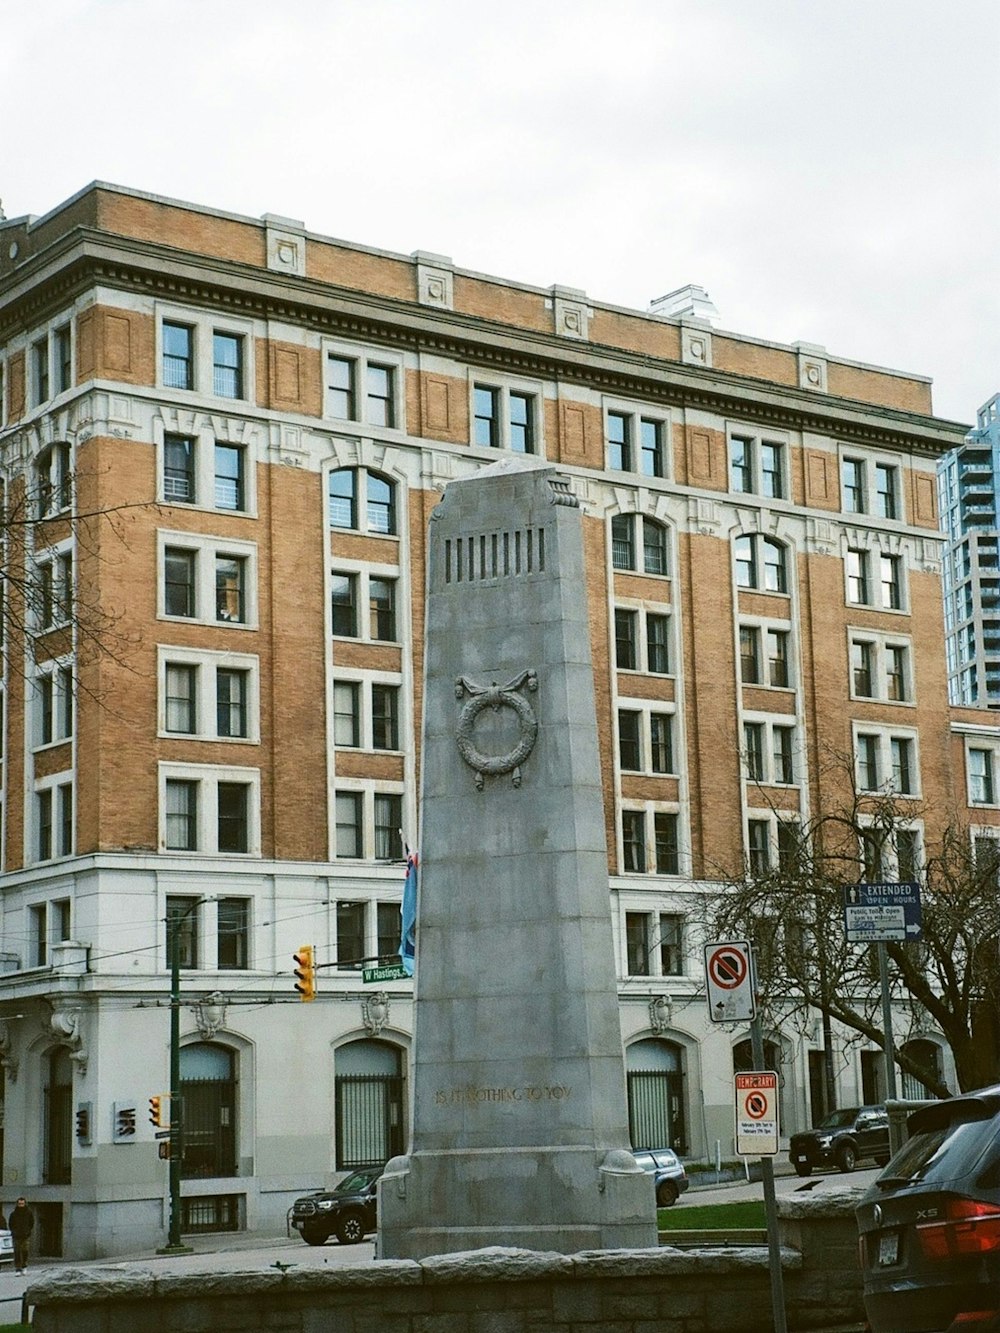 Un monumento frente a un edificio con un reloj